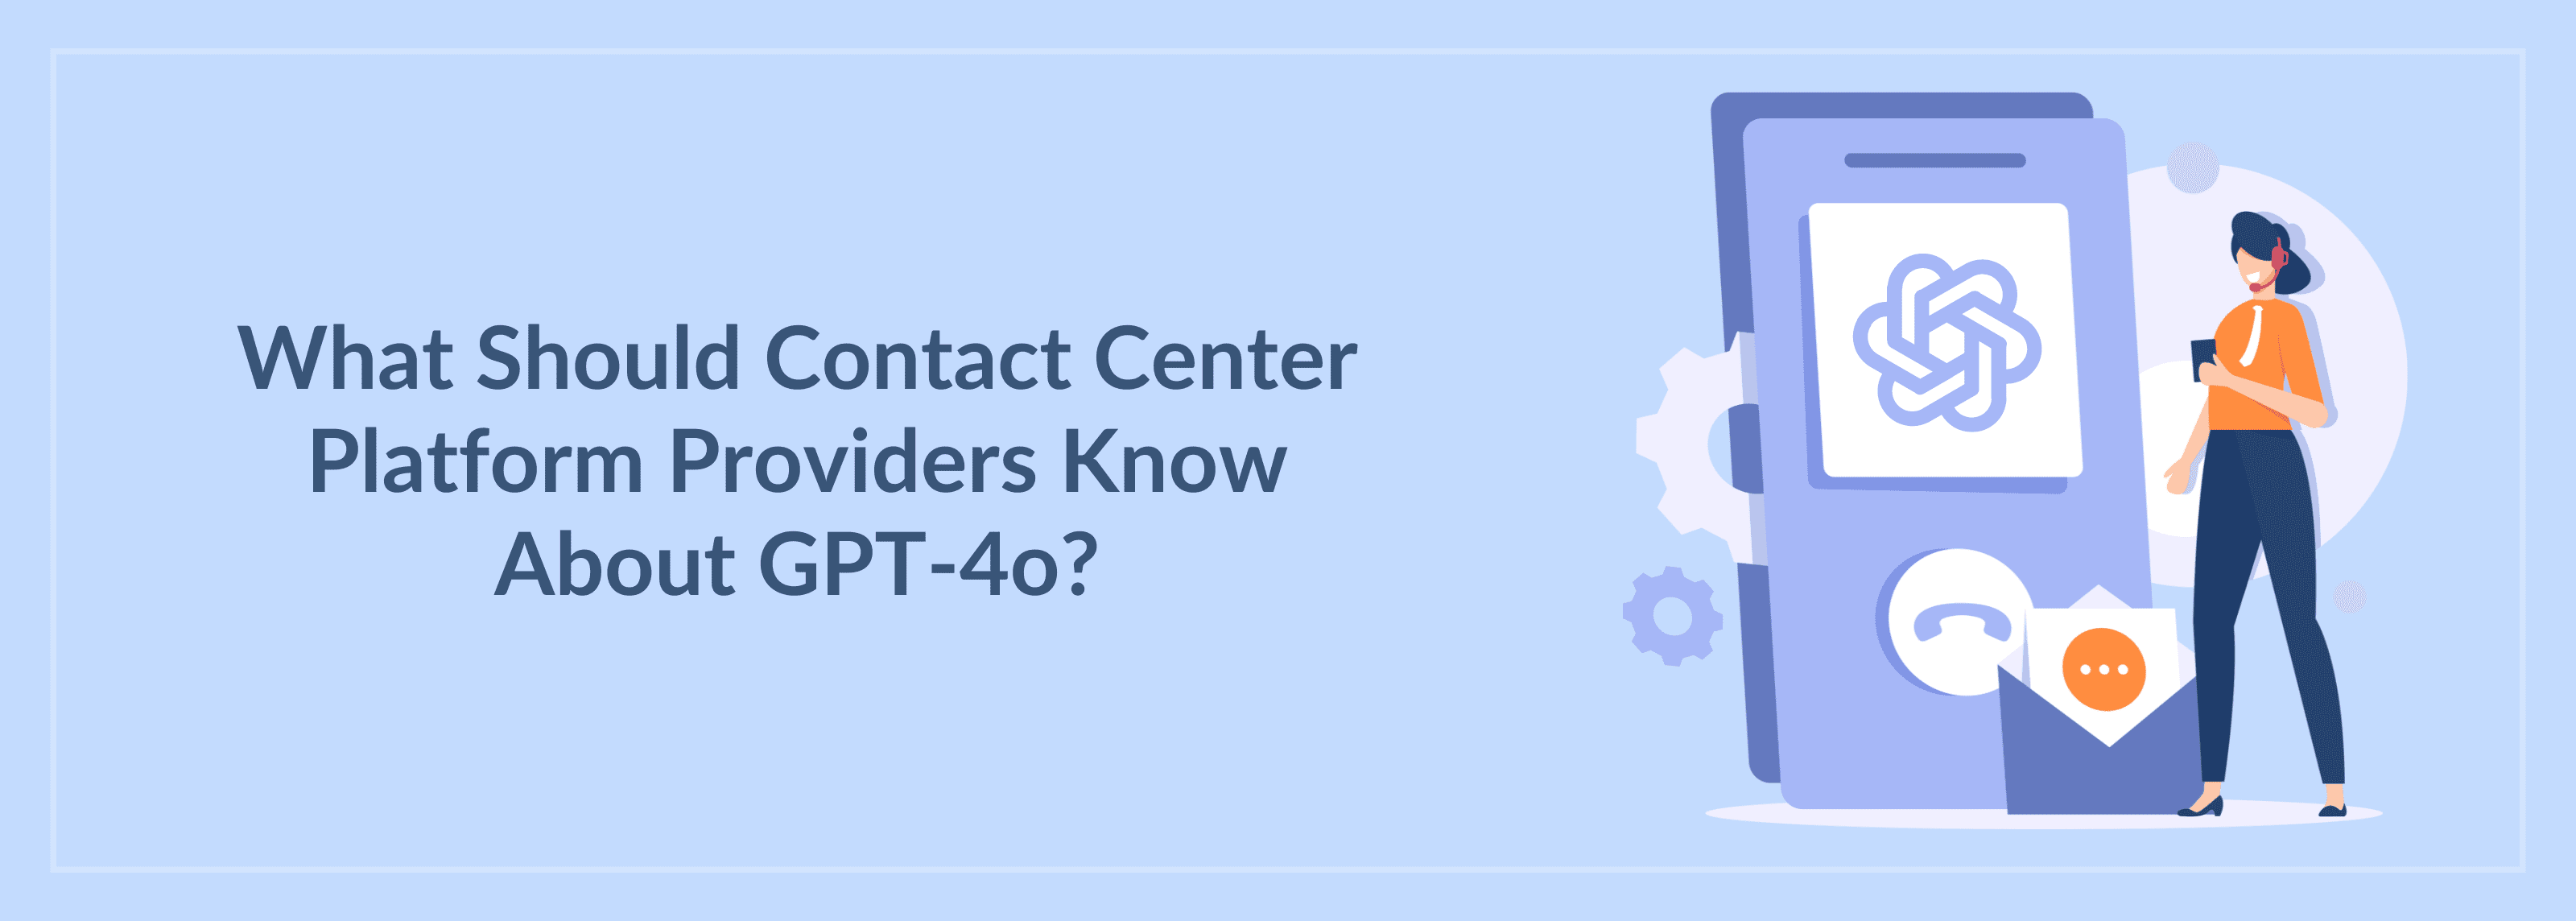 Contact Center Platform with GPT-4o